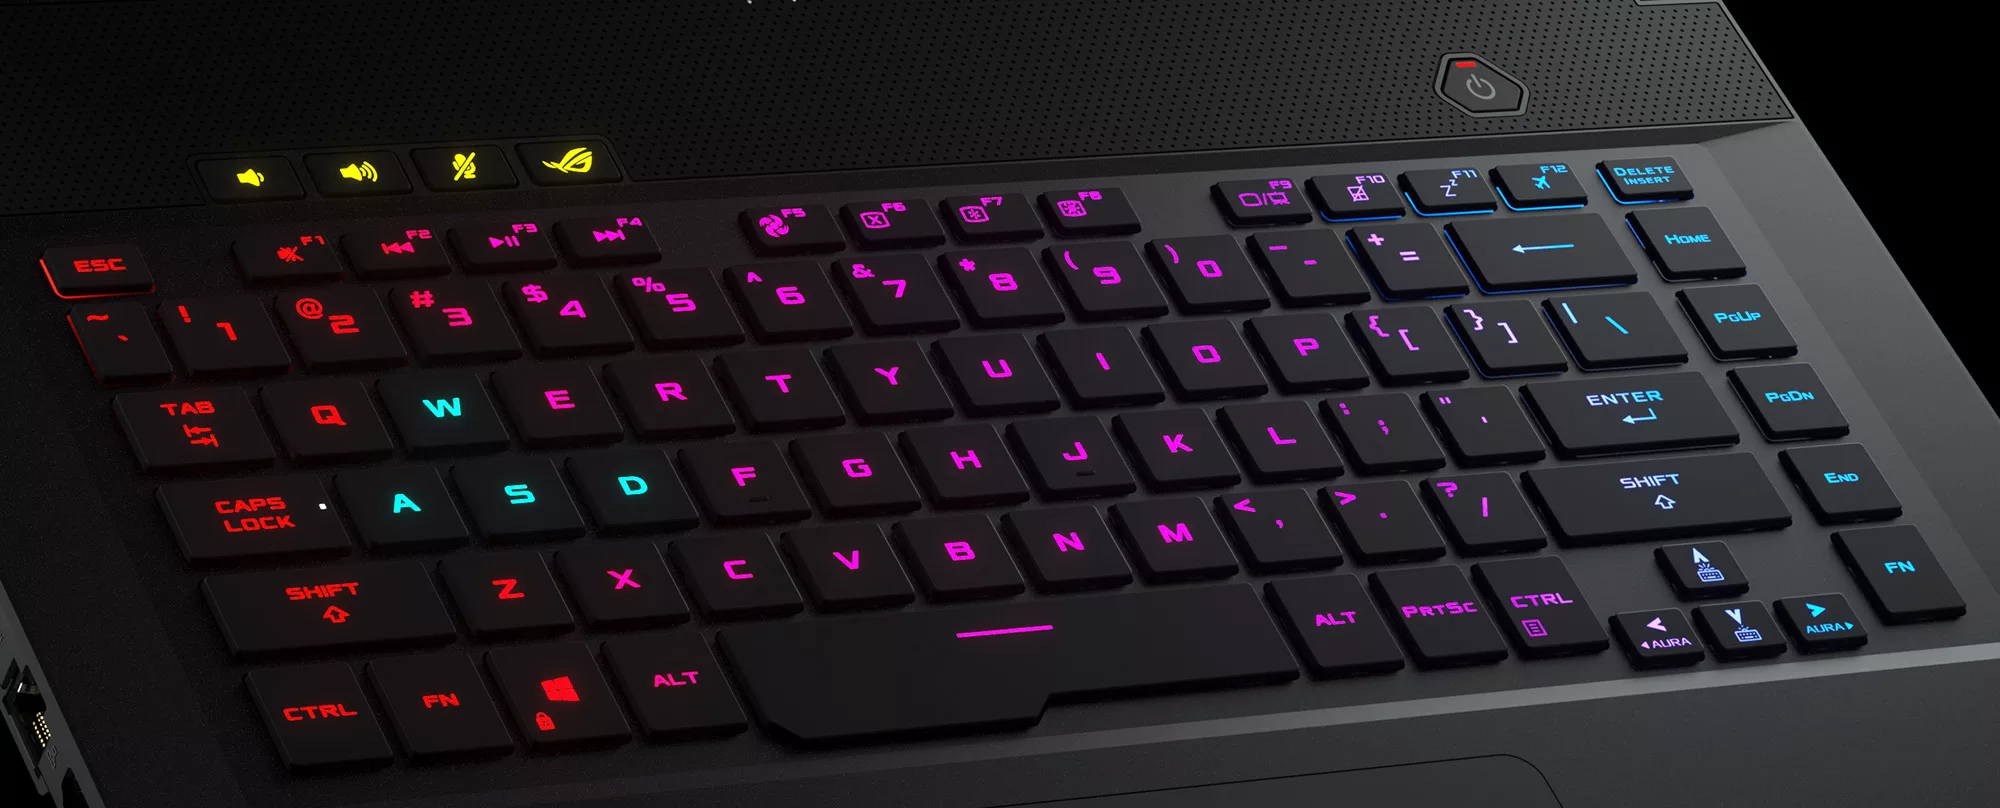 GU502-Keyboard-Crop